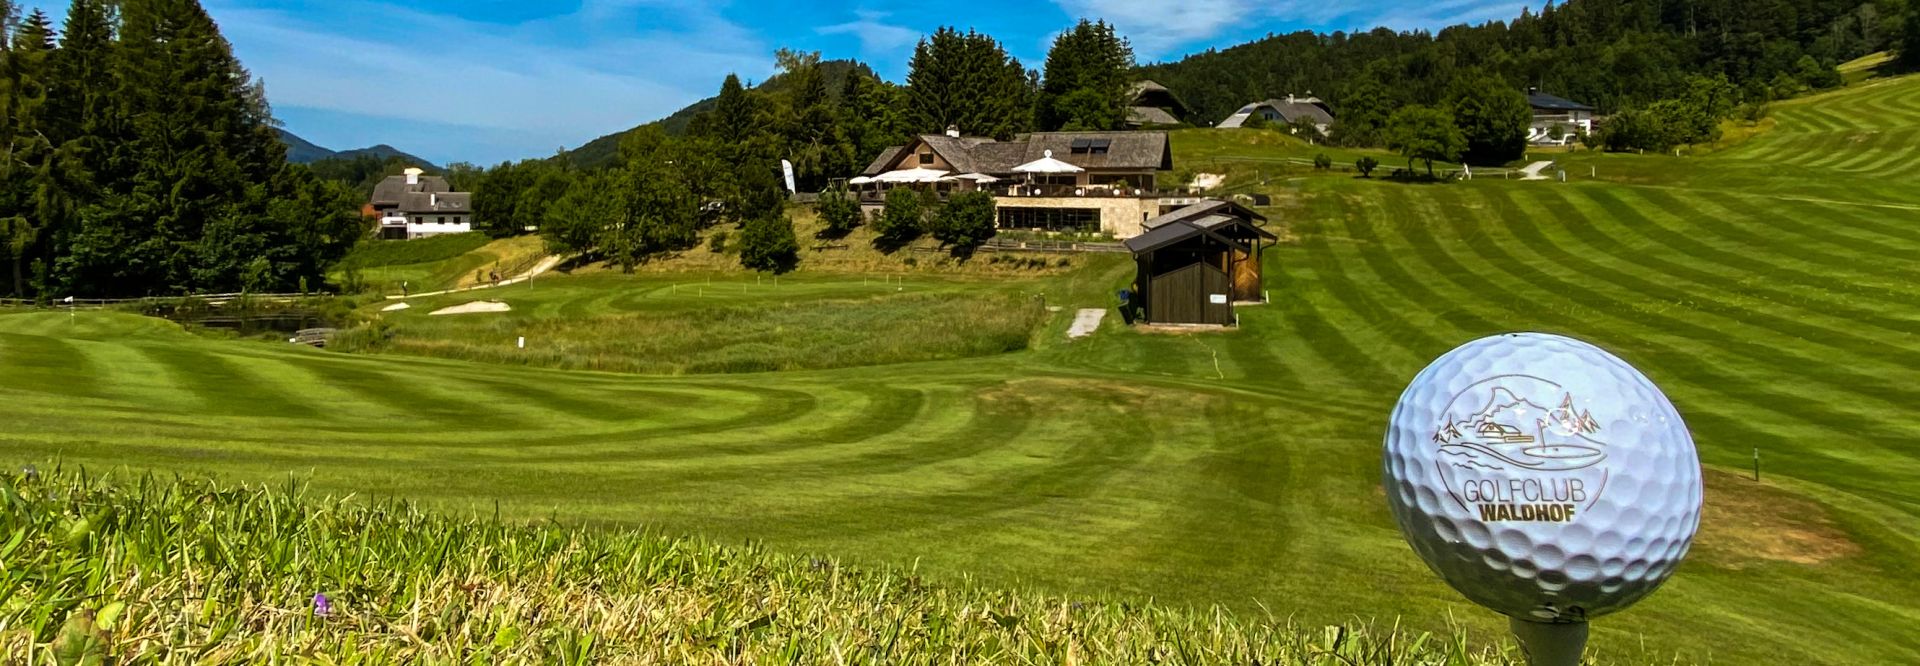 9-Loch-Golfplatz (Ebner&#039;s Waldhof)